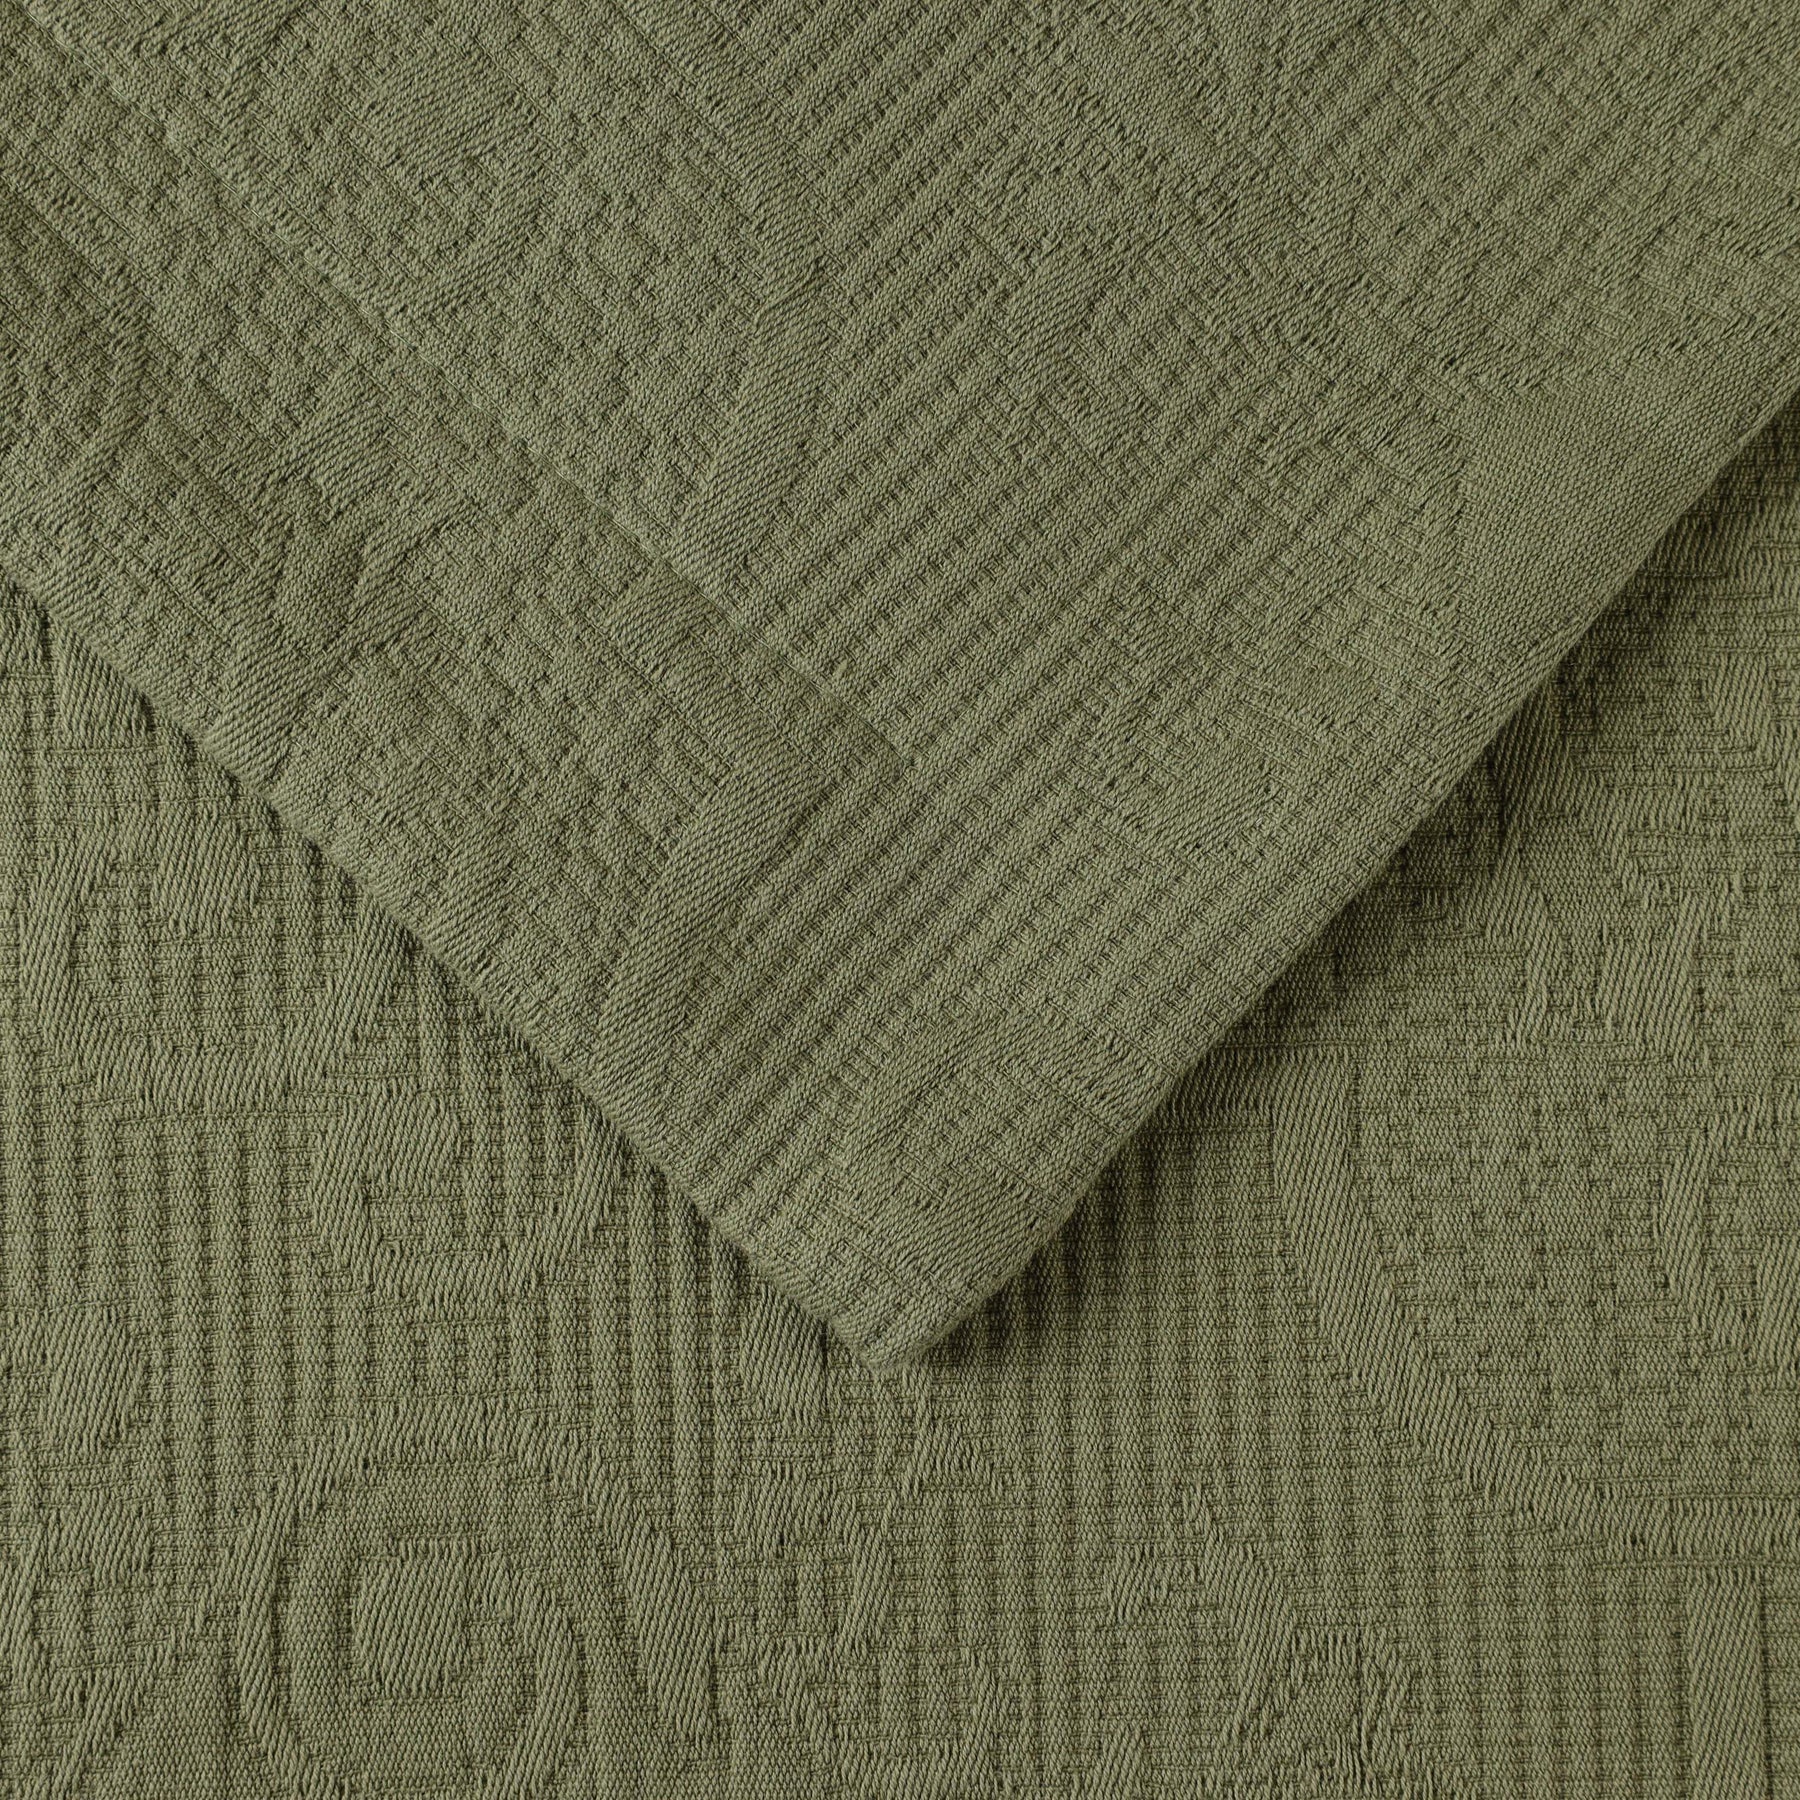 Florin Cotton Matelasse Weave Jacquard Scroll Medallion Bedspread Set - Sage